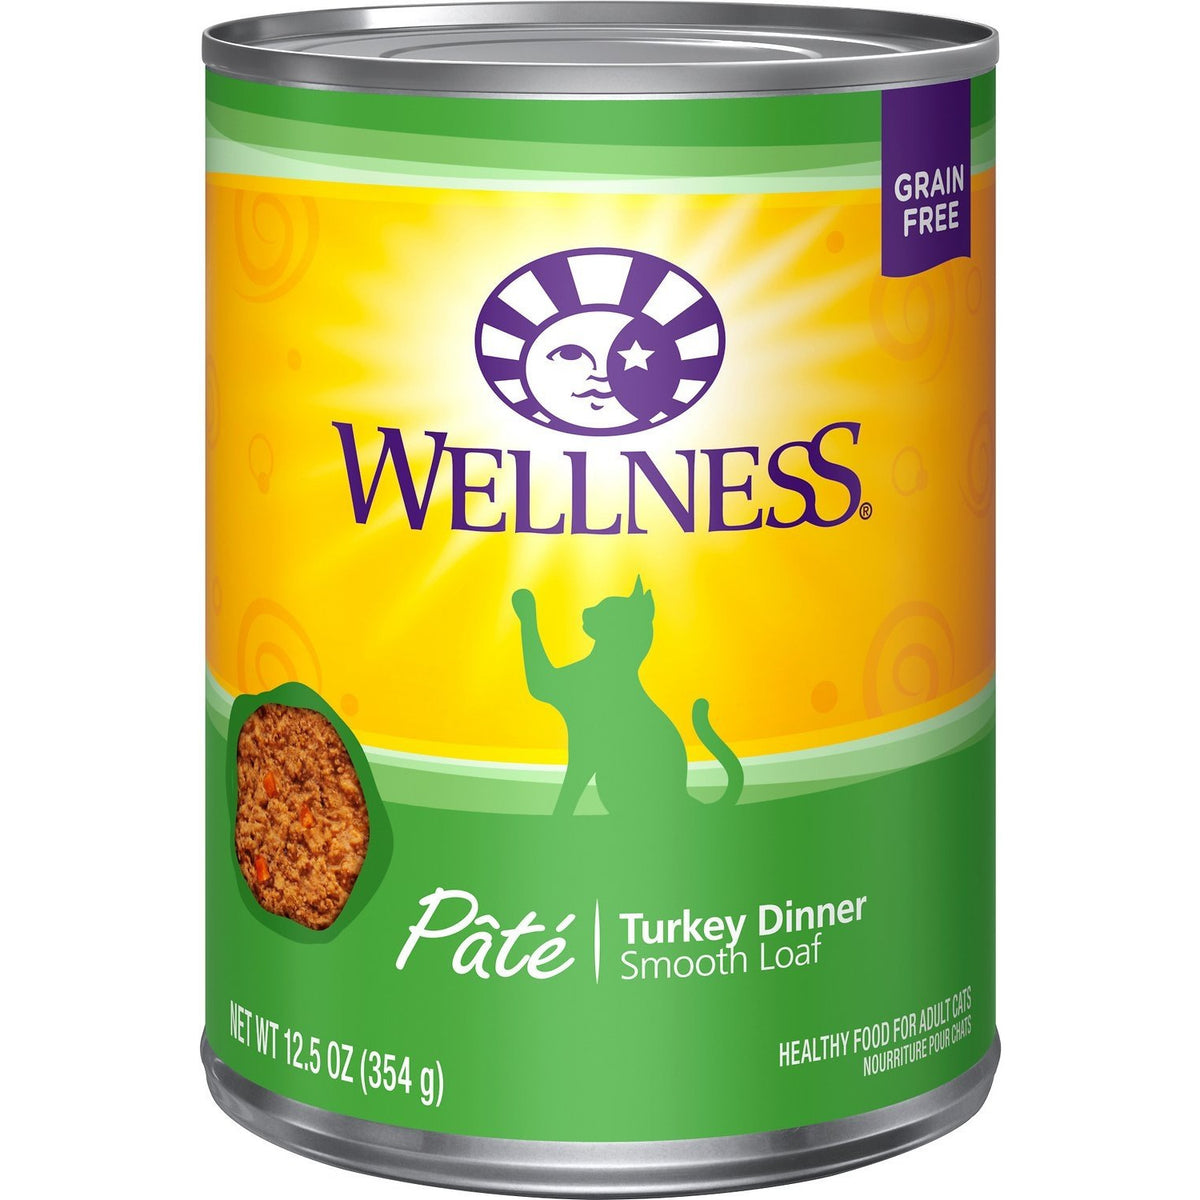 Wellness - Pâté Turkey Dinner Wet Canned Cat Food (12.5oz)